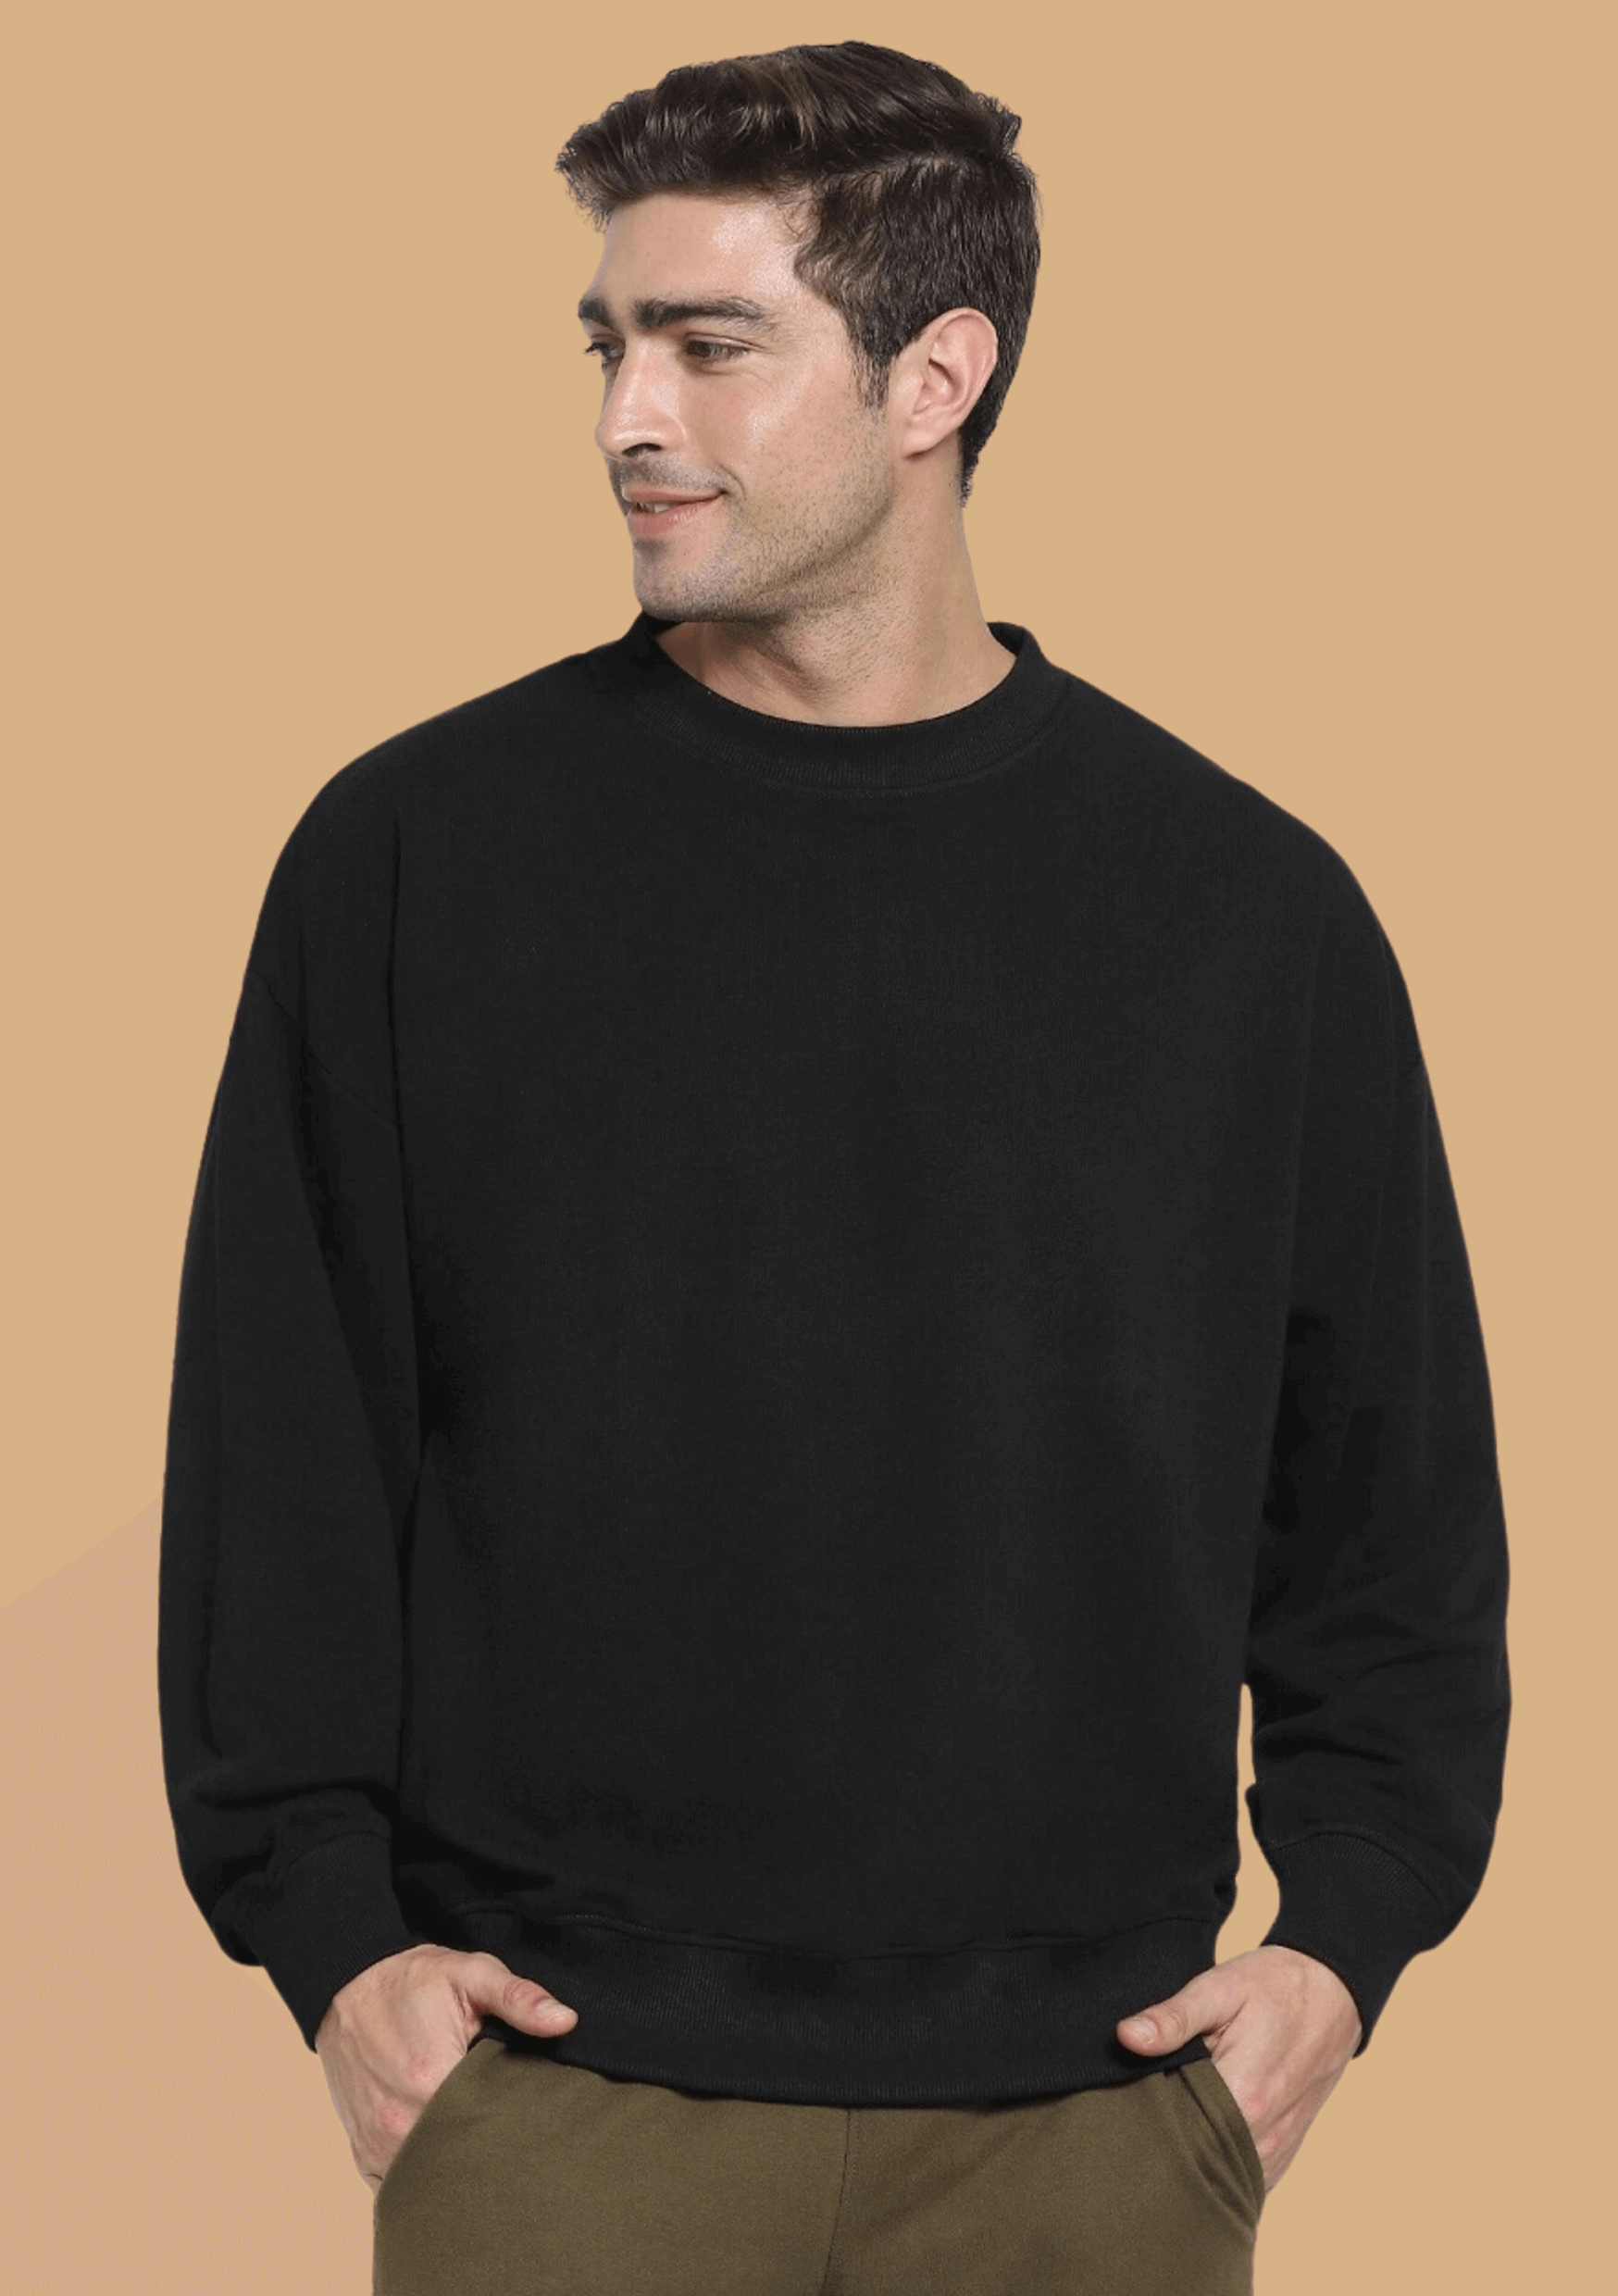 Revolution printed black color men's sweatshirt by offmint